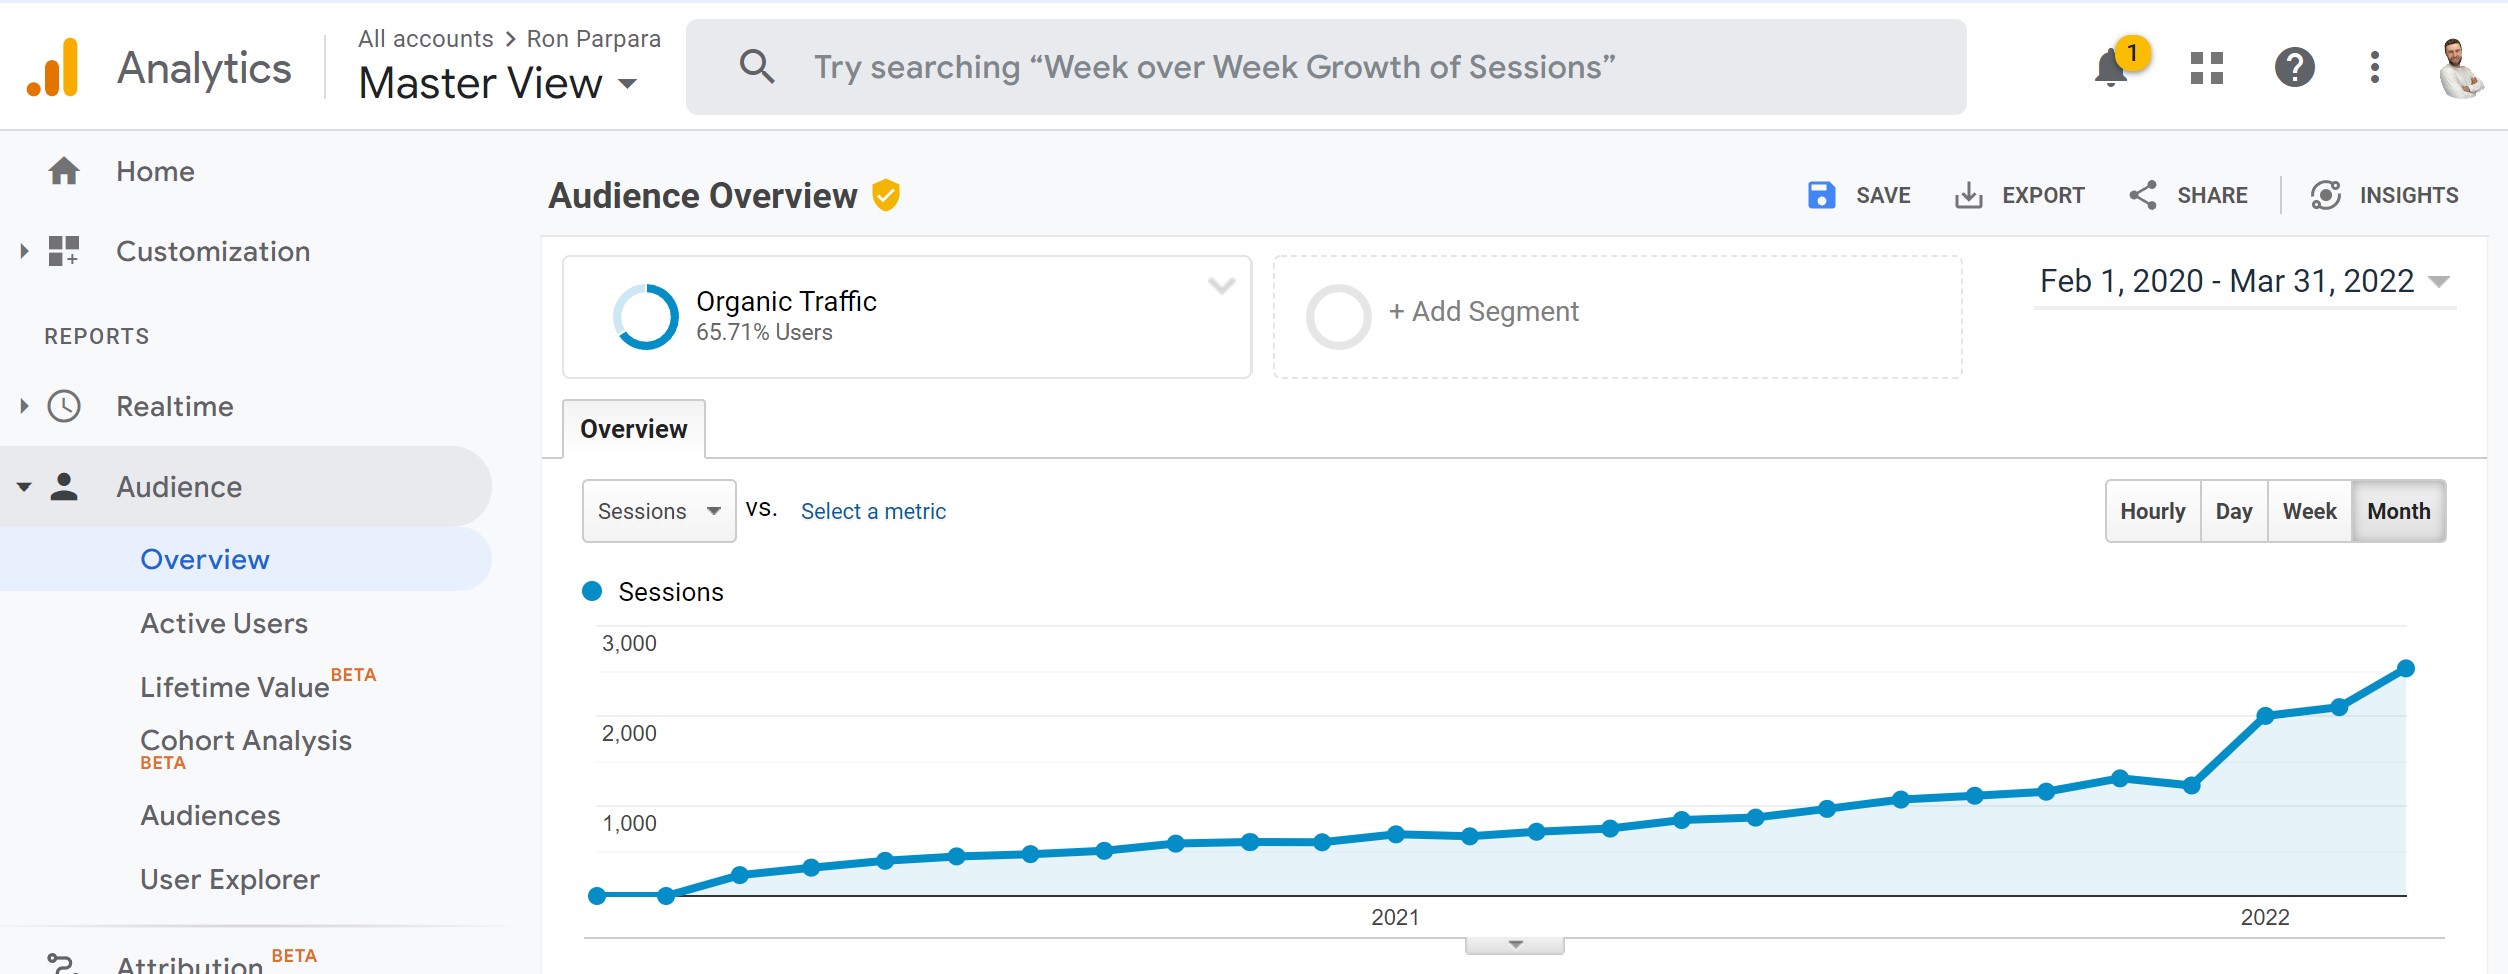 Ron Parpara Organic Traffic Growth Google Analytics